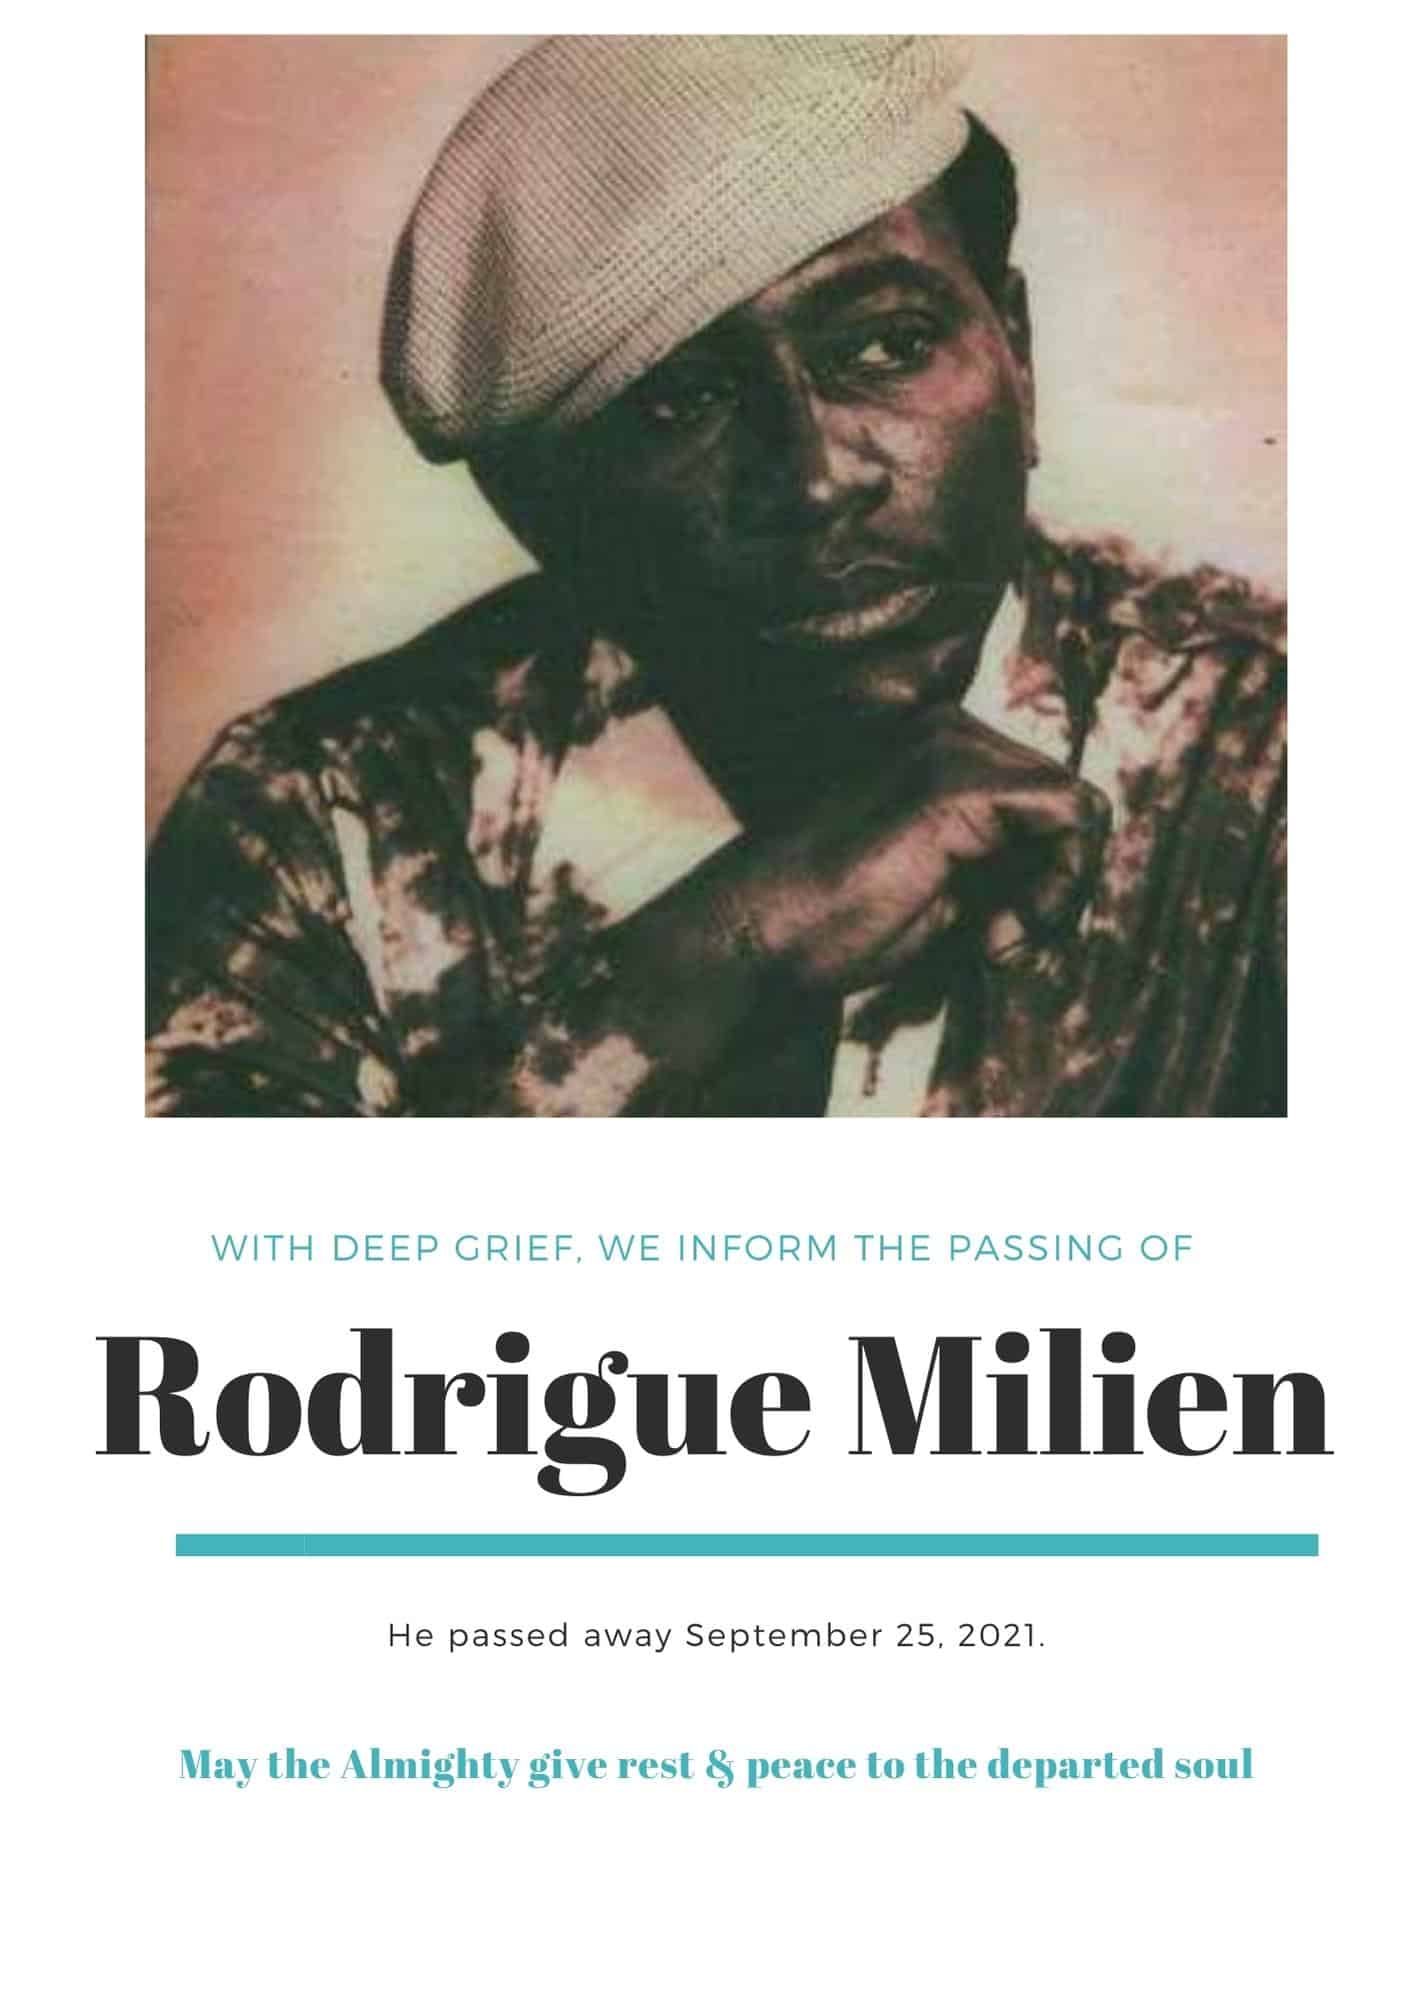 Rodrigue Milien is dead